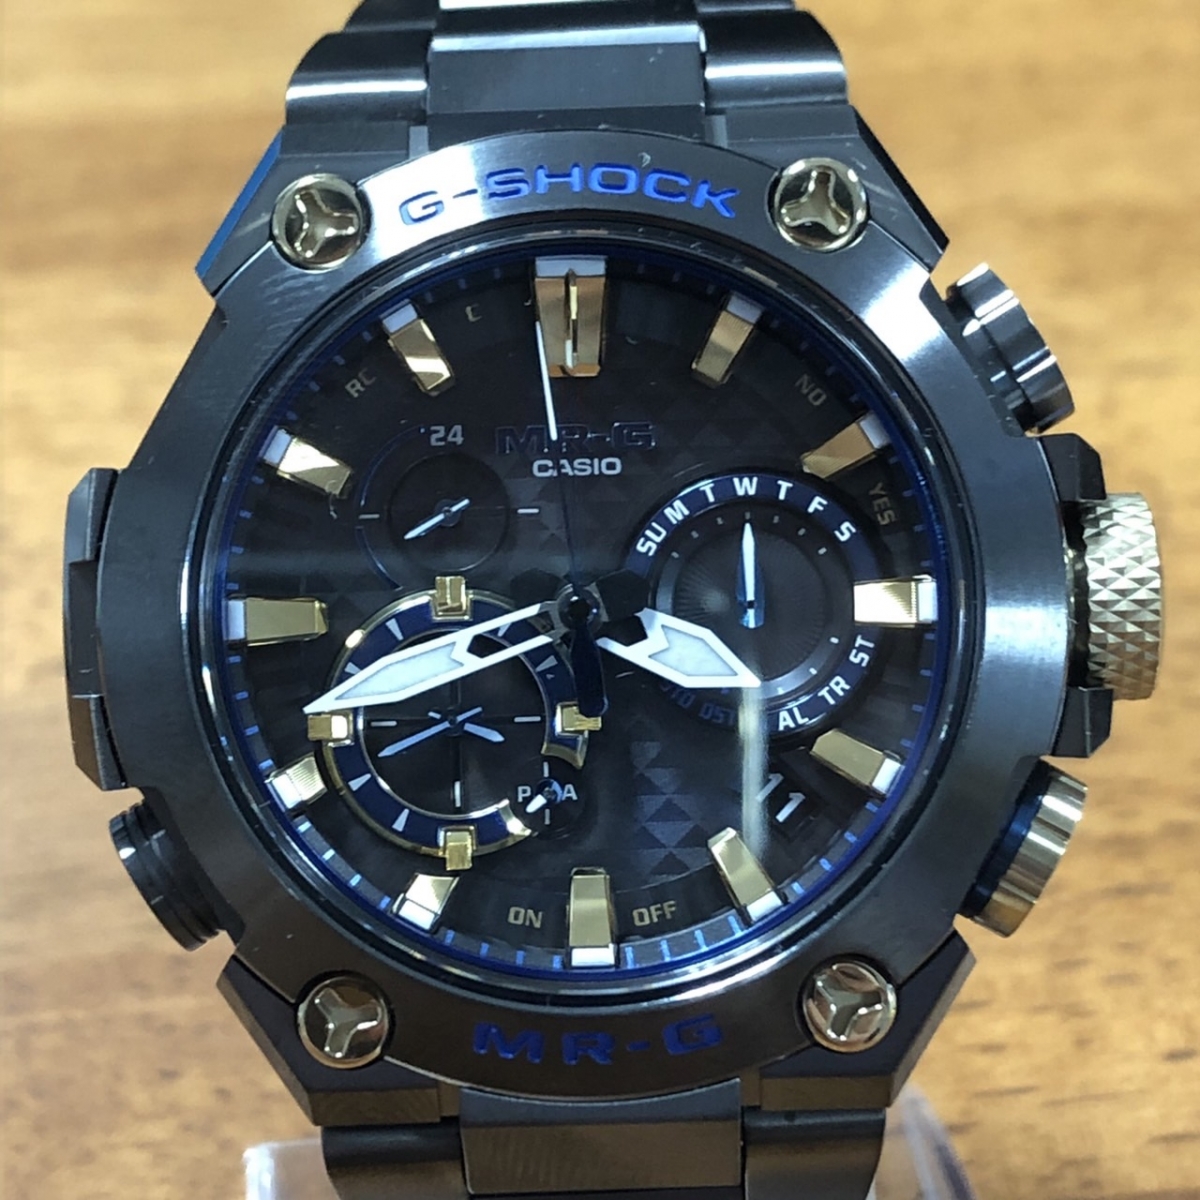 G-SHOCKのMRG-B2000B-1AJR 勝色 チタン Bluetooth搭載 電波ソーラー腕時計 ブラックの買取実績です。